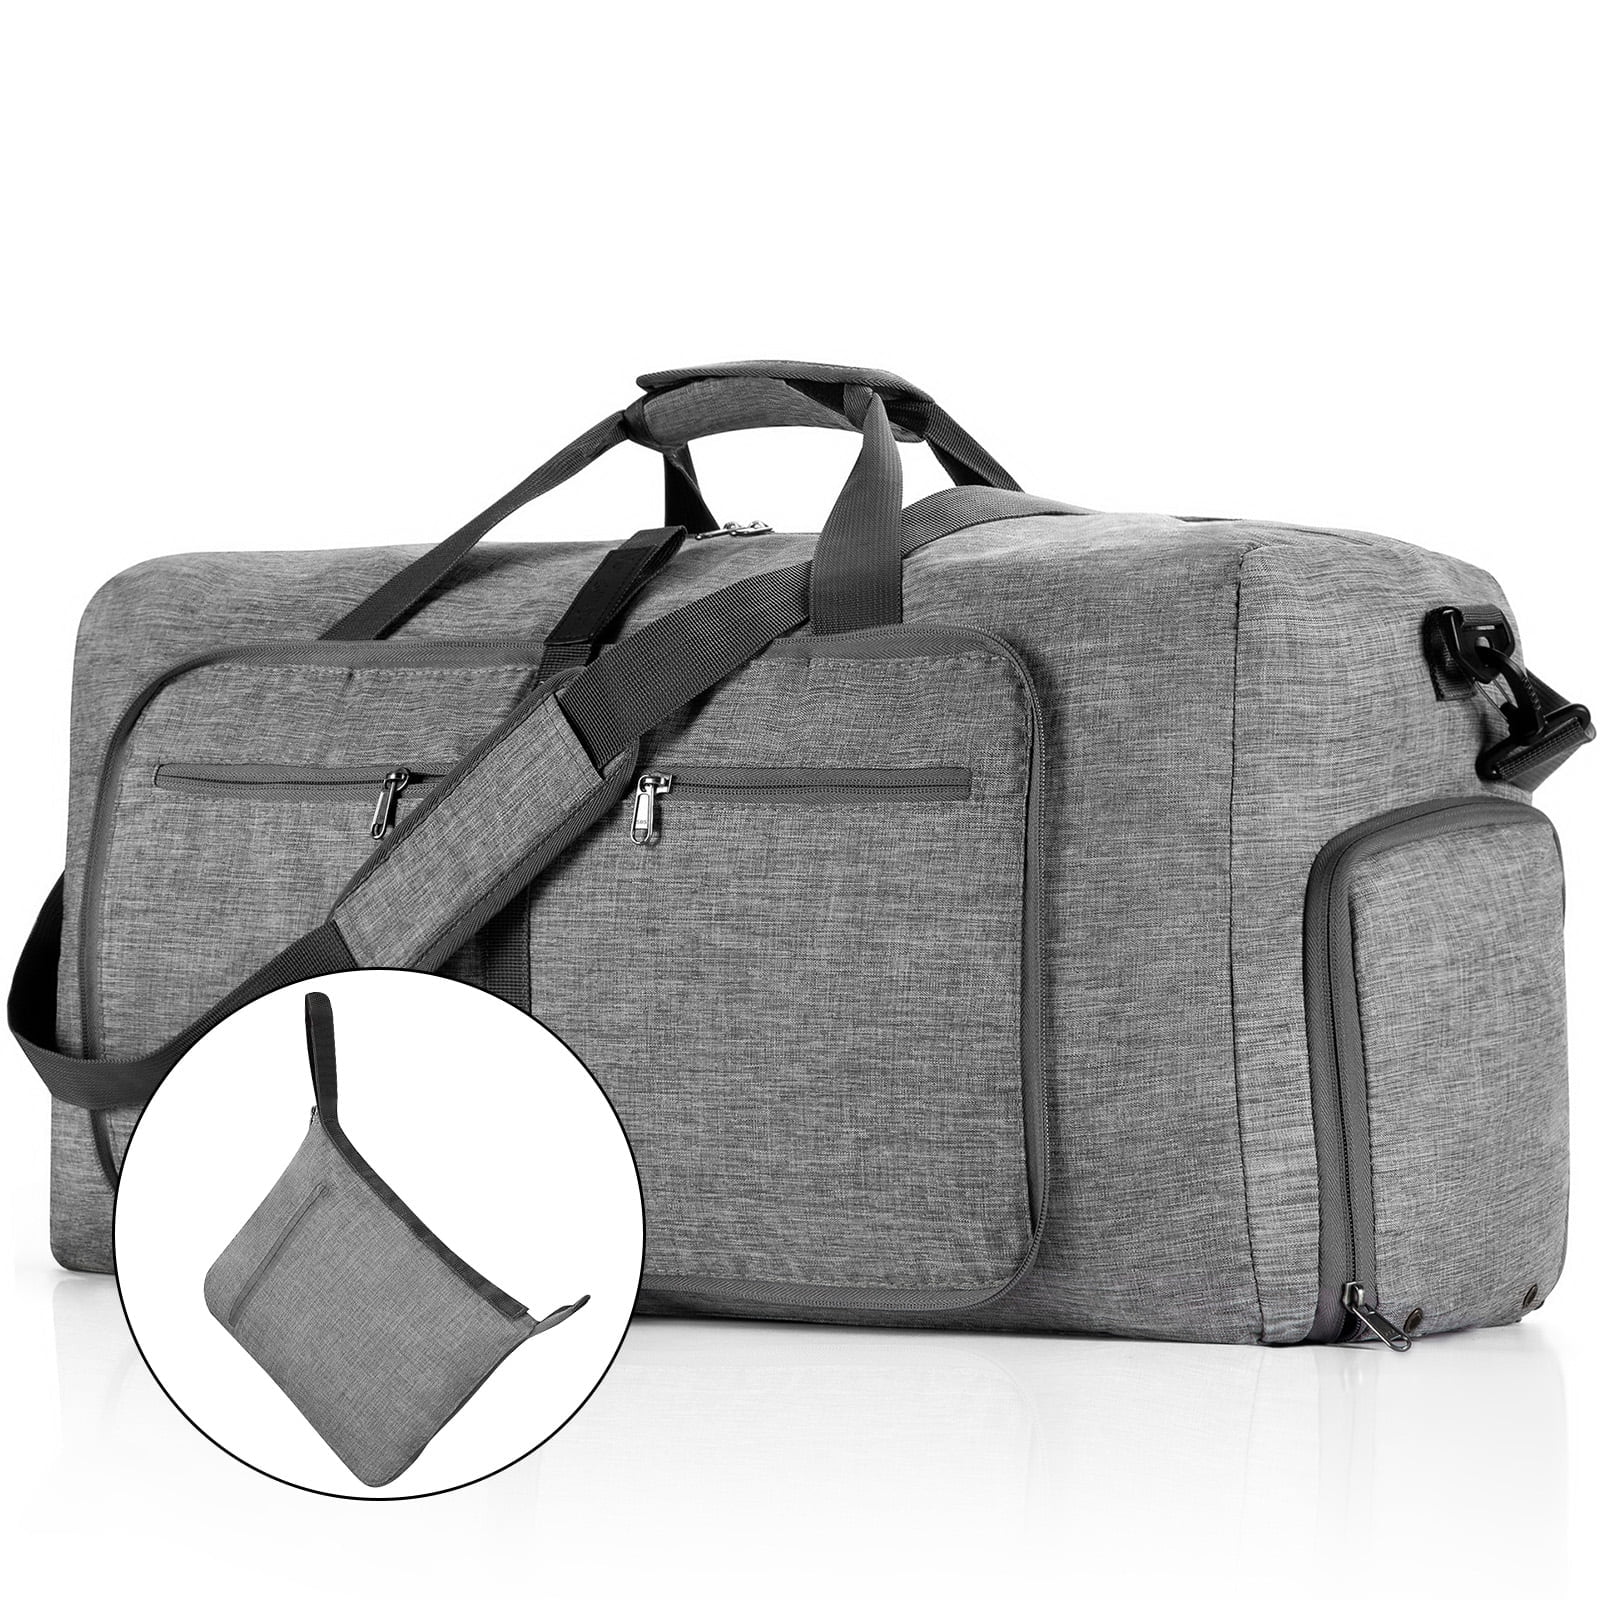 Backpack Liner Organizer Insert Bag in Bag Compartment Sorting Bag Travel  Handbag Storage Finishing | Shopee Philippines